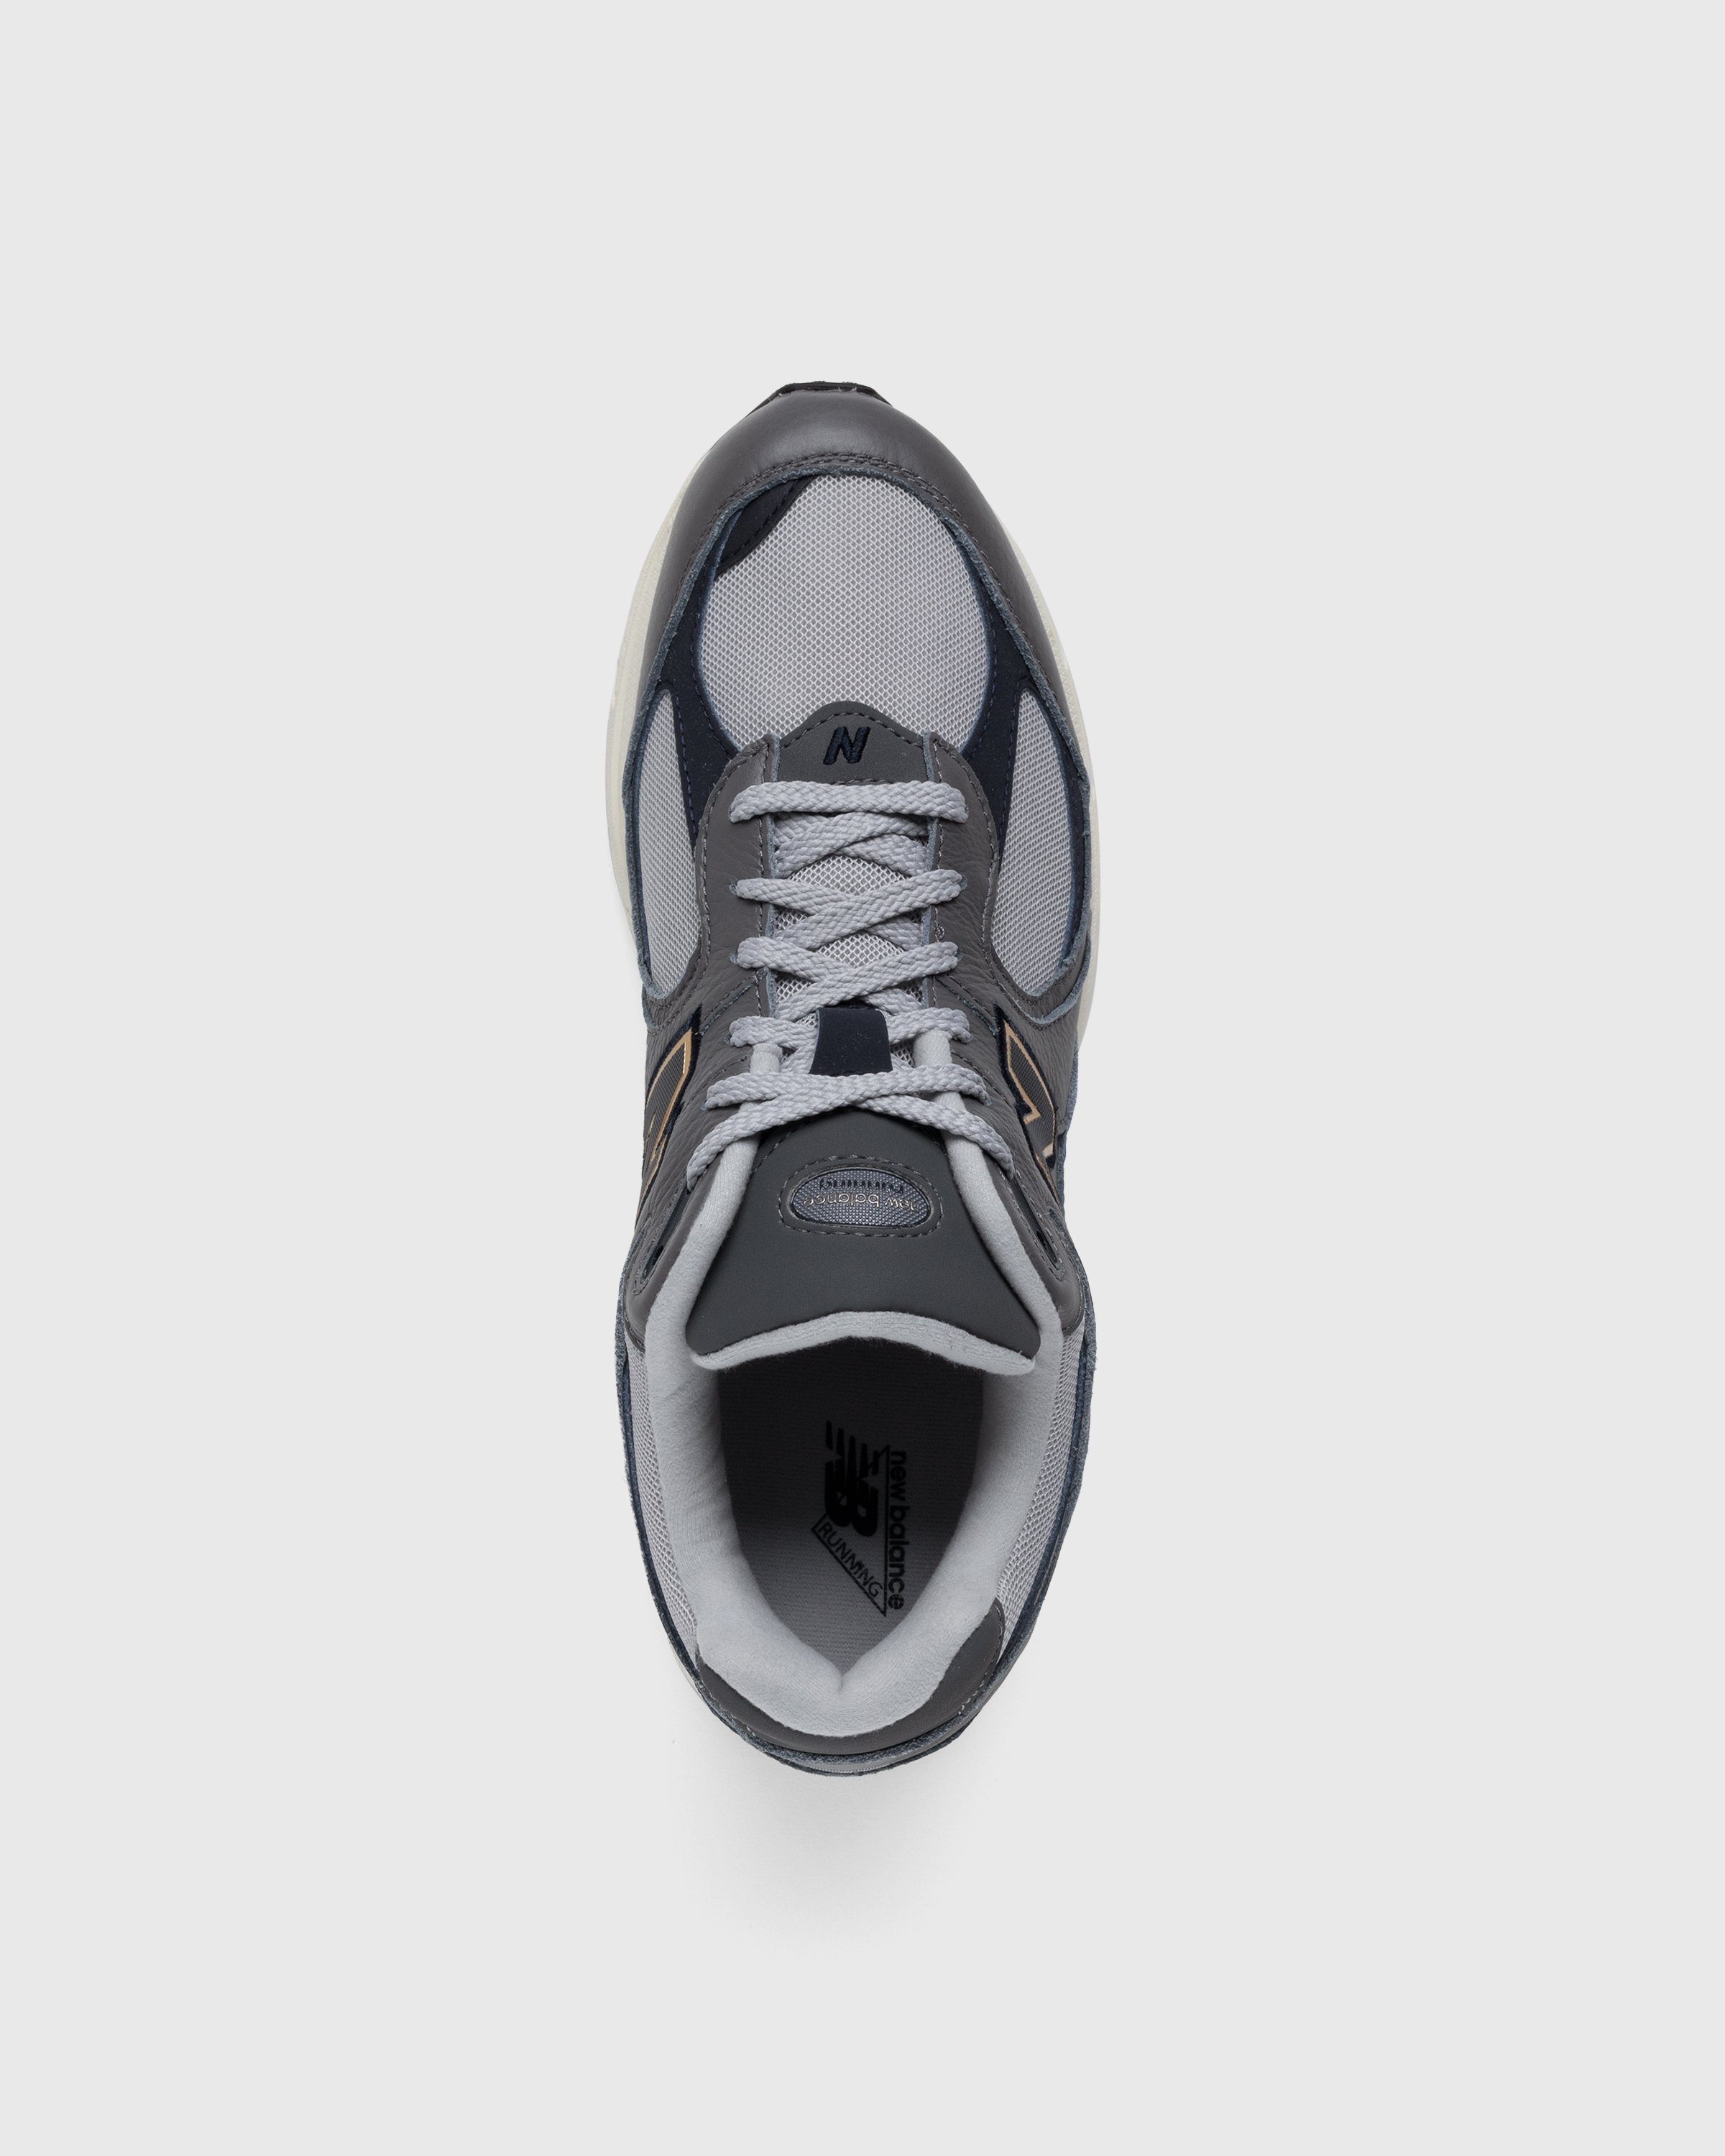 New Balance - M2002RHP Castle Rock - Footwear - Grey - Image 5